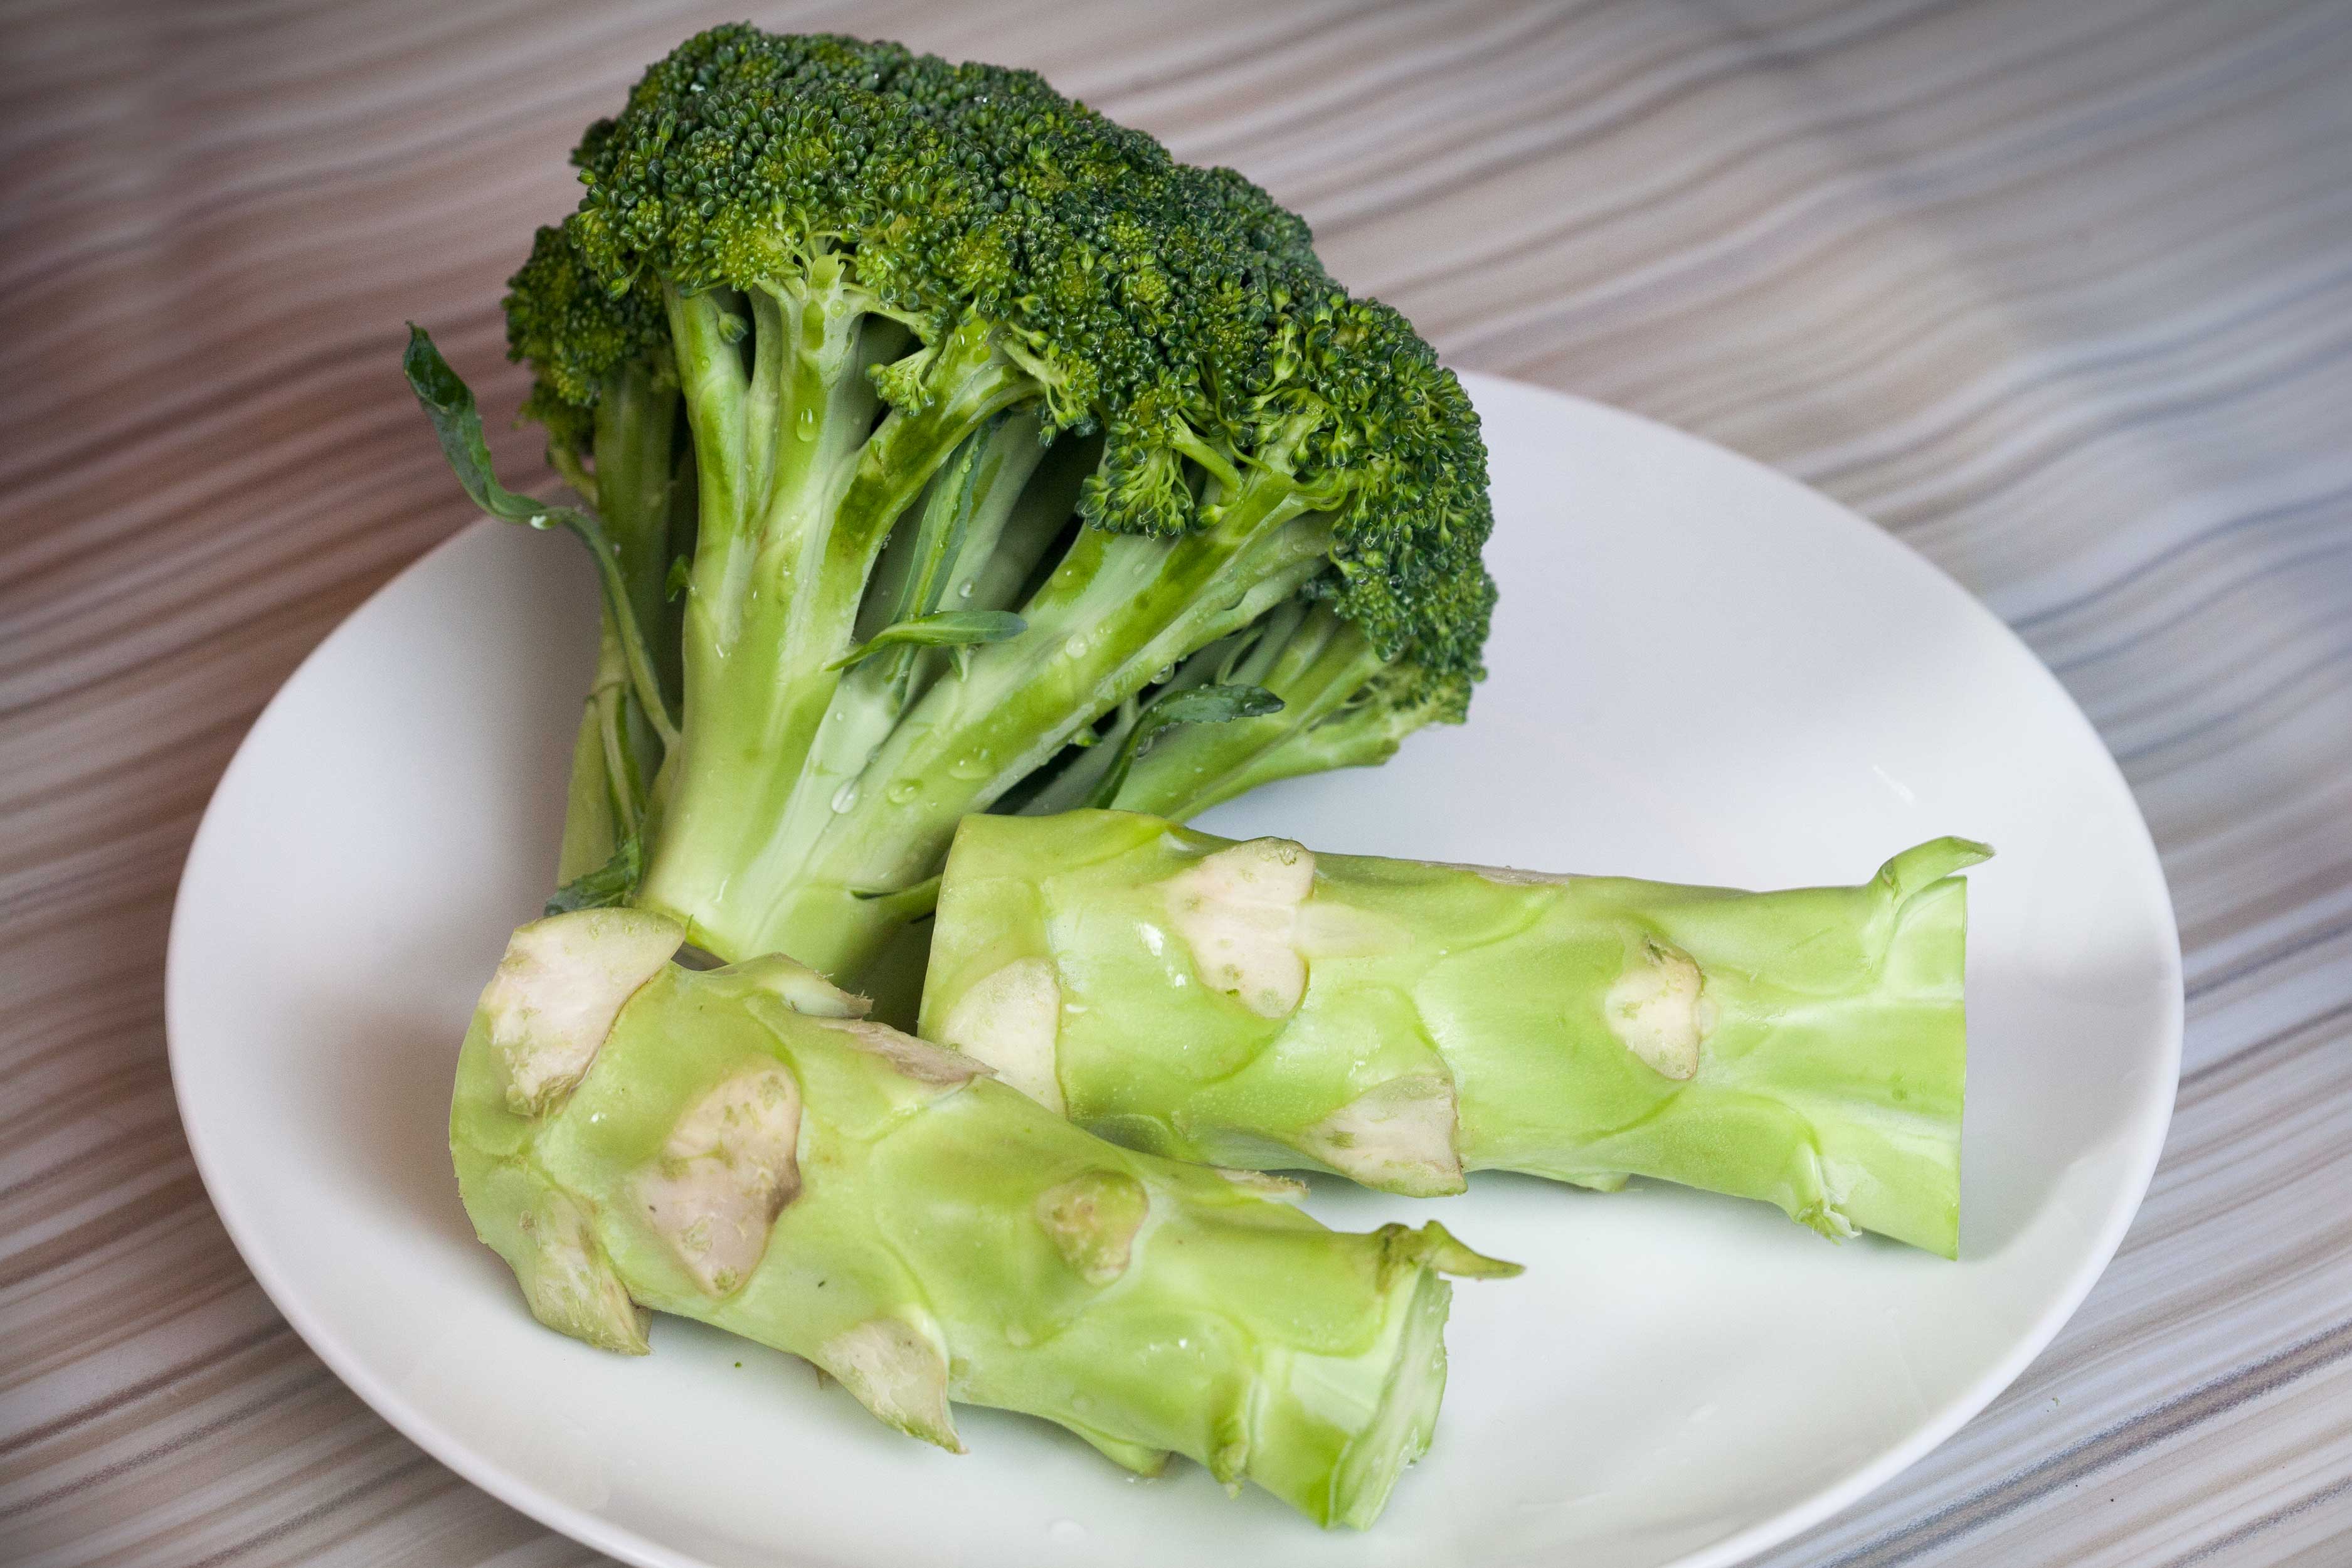 broccoli stems, as healthy as florets?